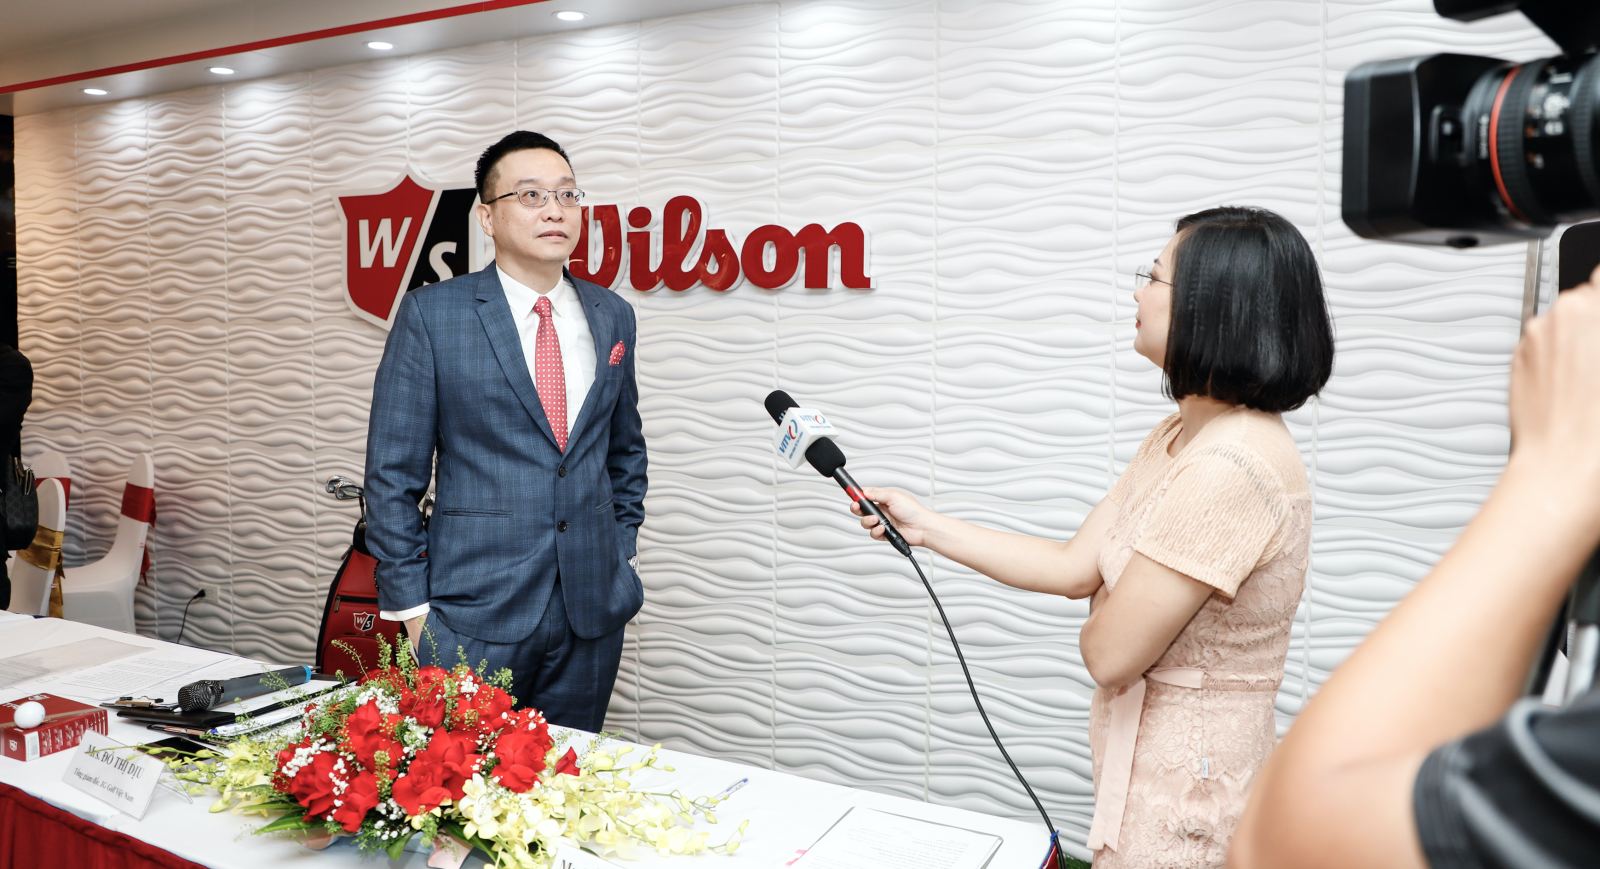 VTV3: Wilson Golf aims to become a popular golf brand in Vietnam